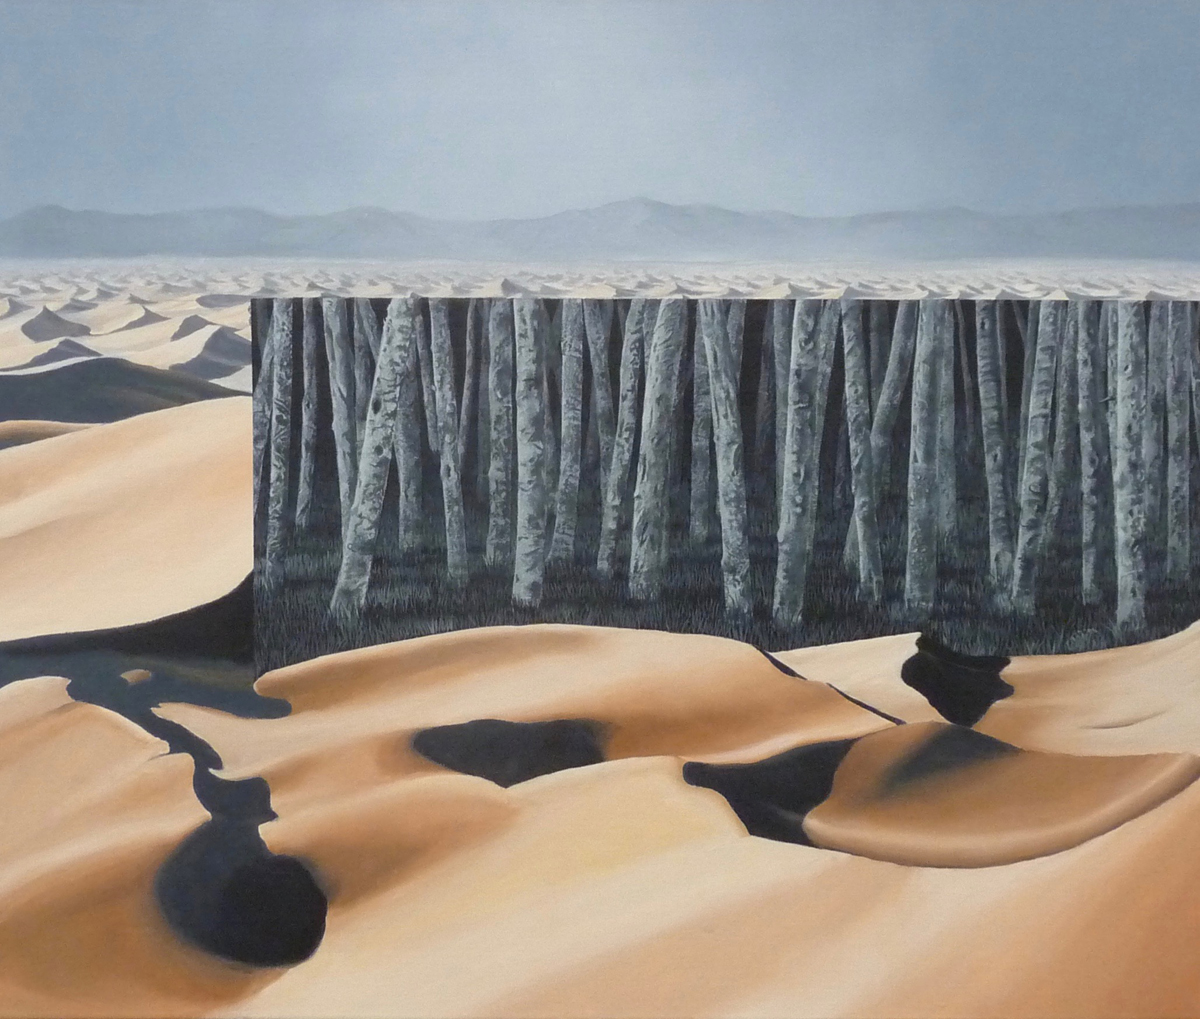 trees in a desert landscape